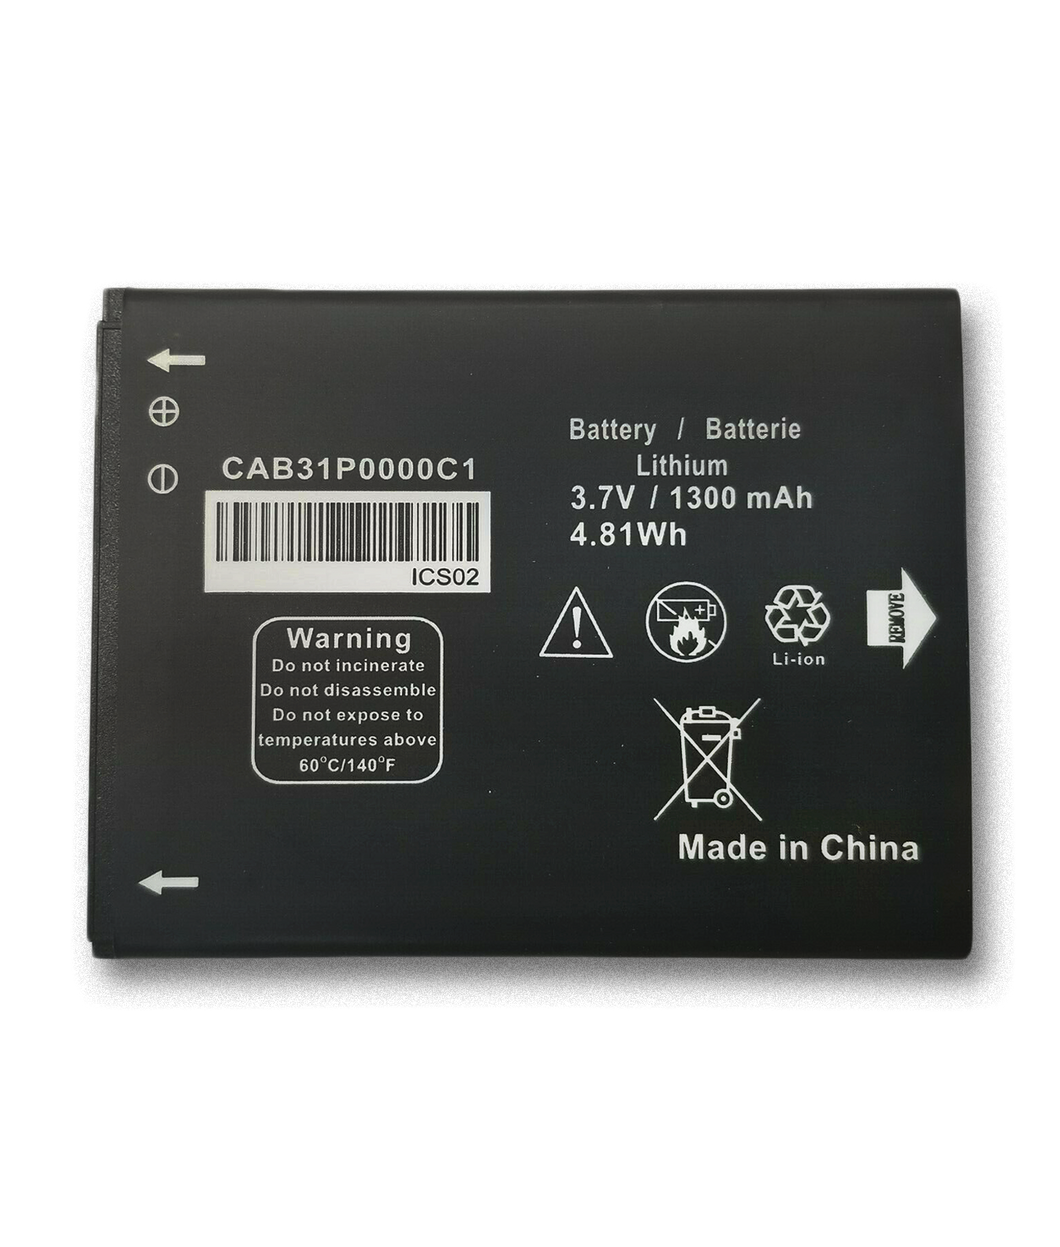 Replacement Battery for Alcatel CAB31P0000C1 CAB31P0001C1 TB-4T0058200 1300mAh